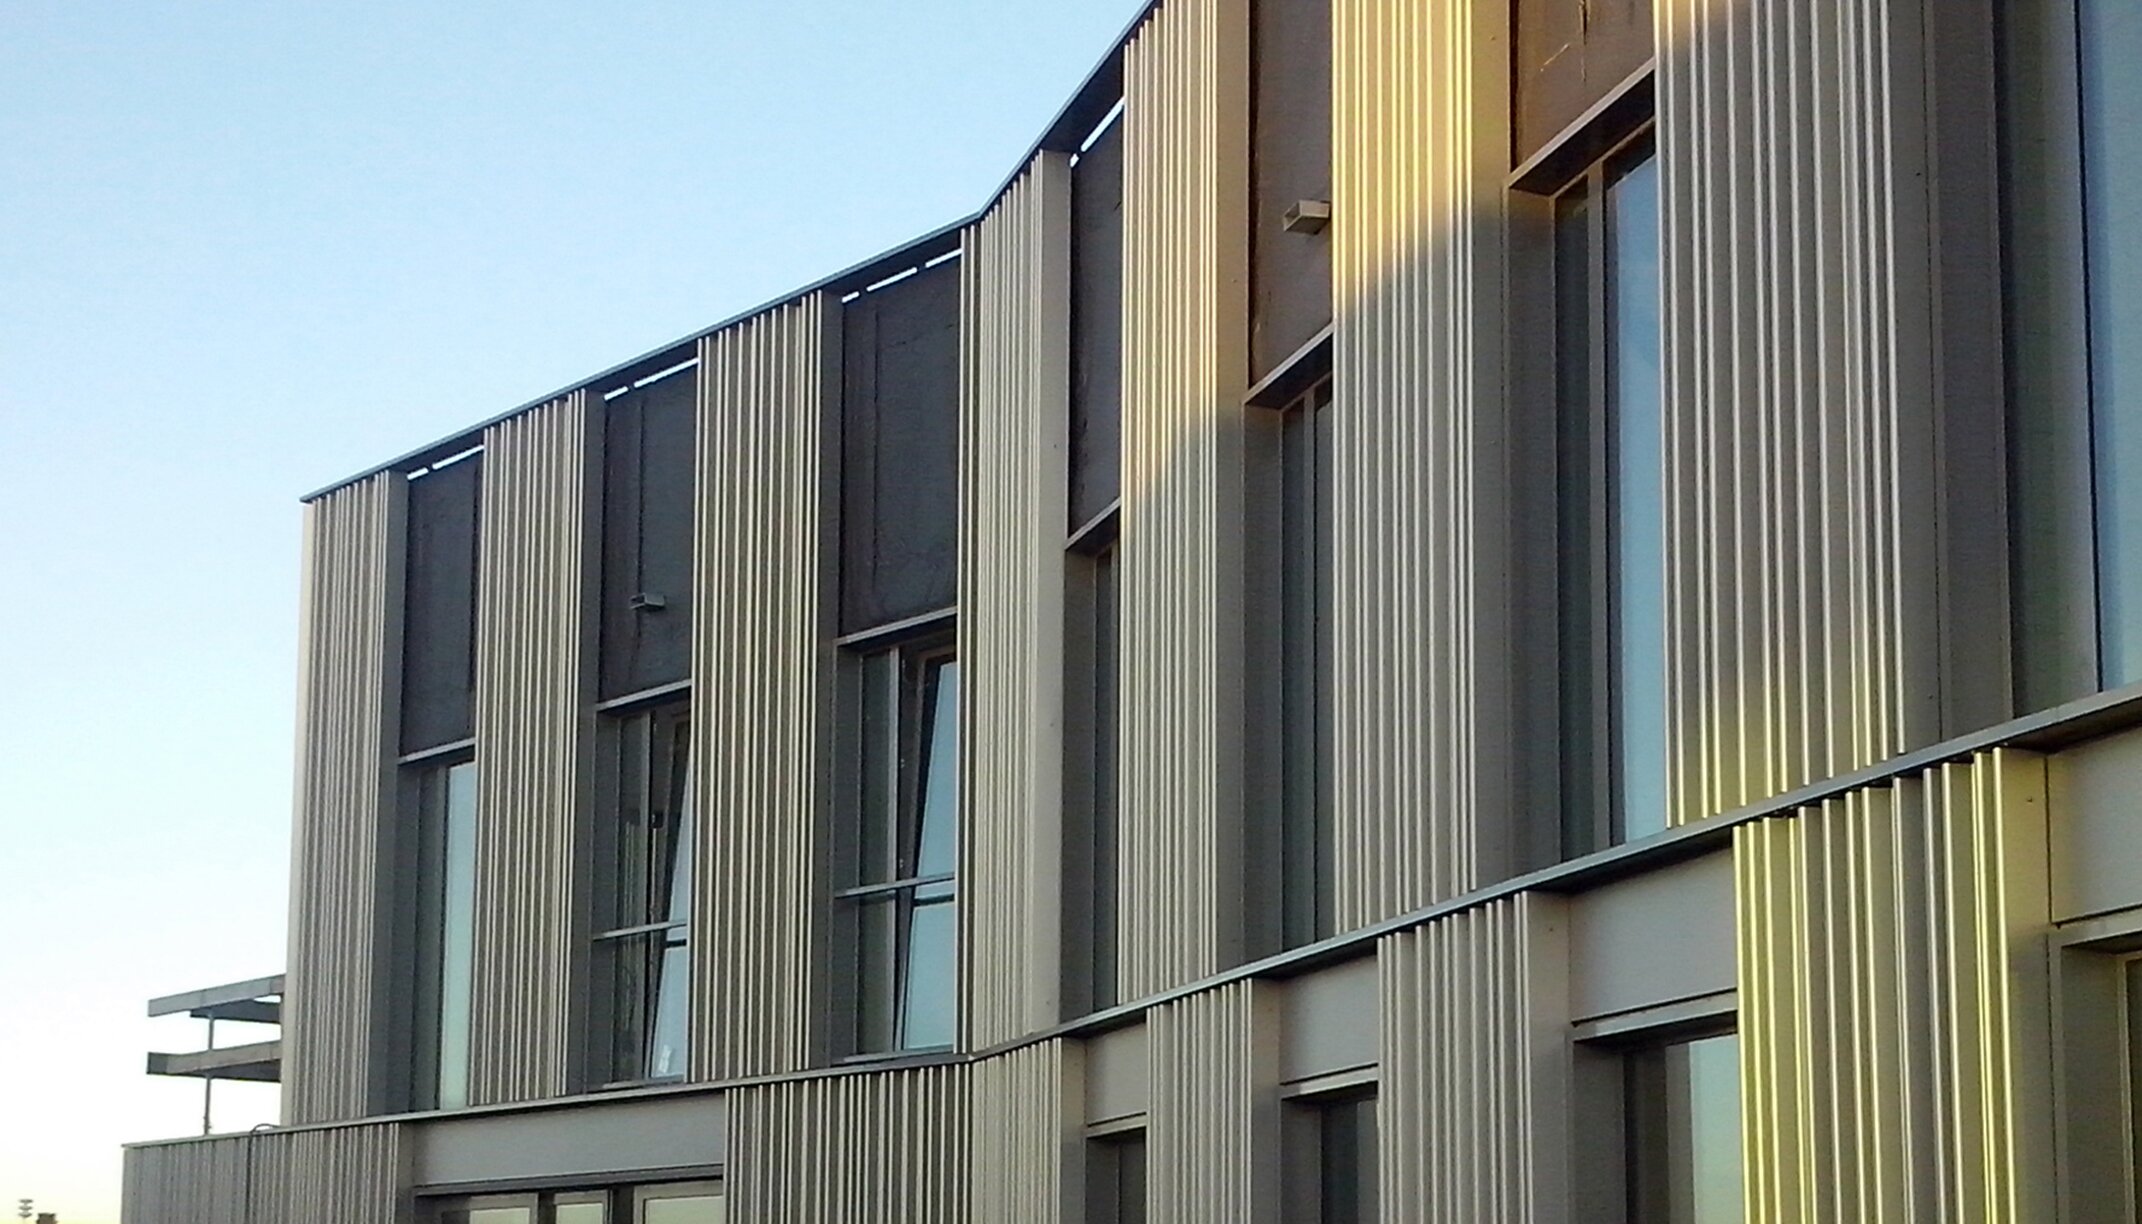 Detailview "Cool 63"; nice aluminum facade design 